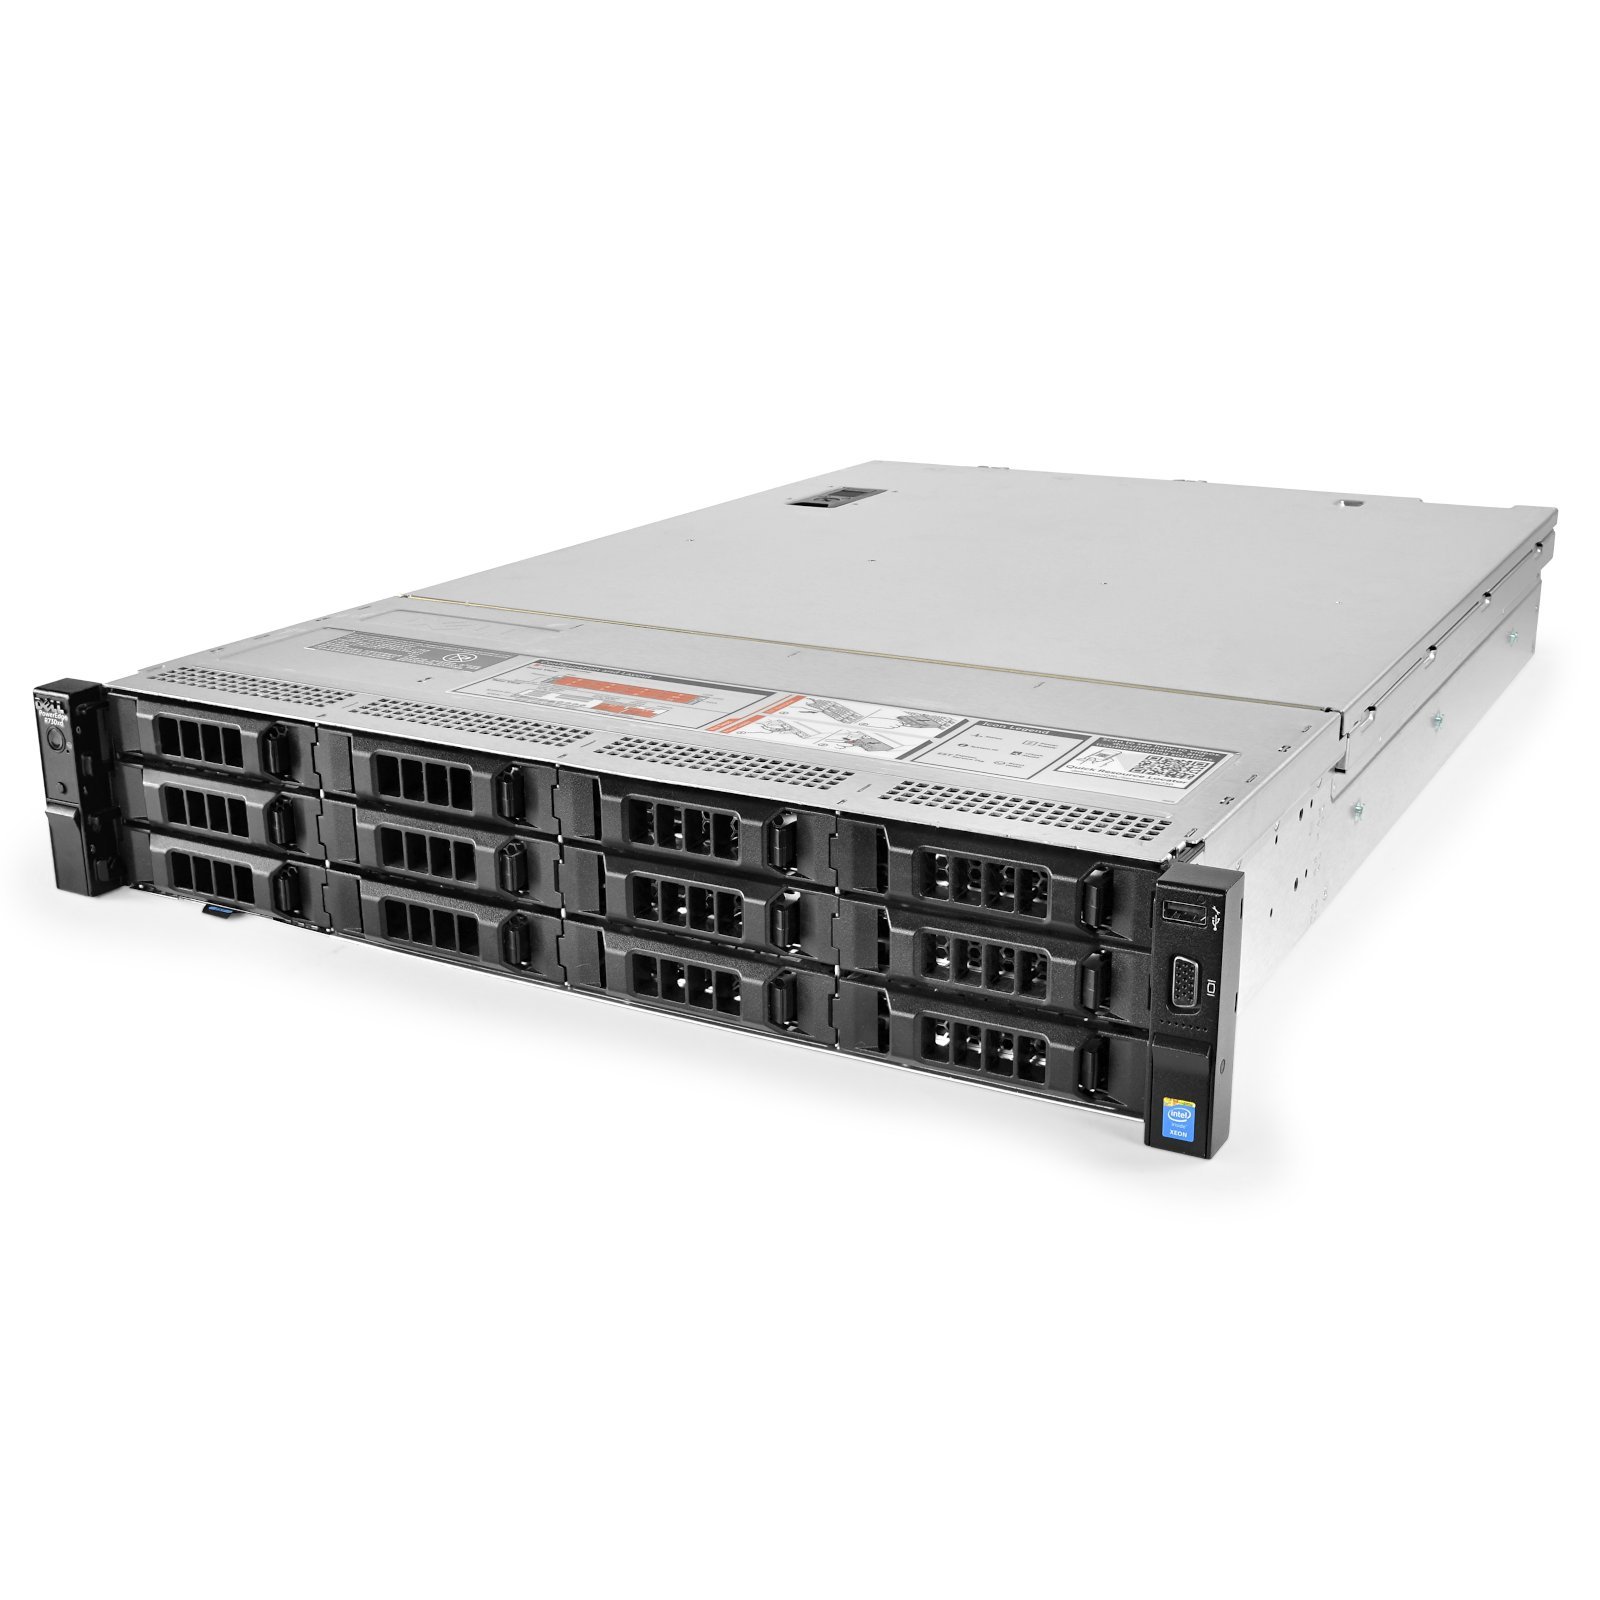 Подробное фото Сервер DELL PowerEdge R730XD Xeon 2x E5-2697Av4 256Gb 2133P DDR4 12x noHDD 3.5", SAS RAID Perc H330 , 2*PSU 750W